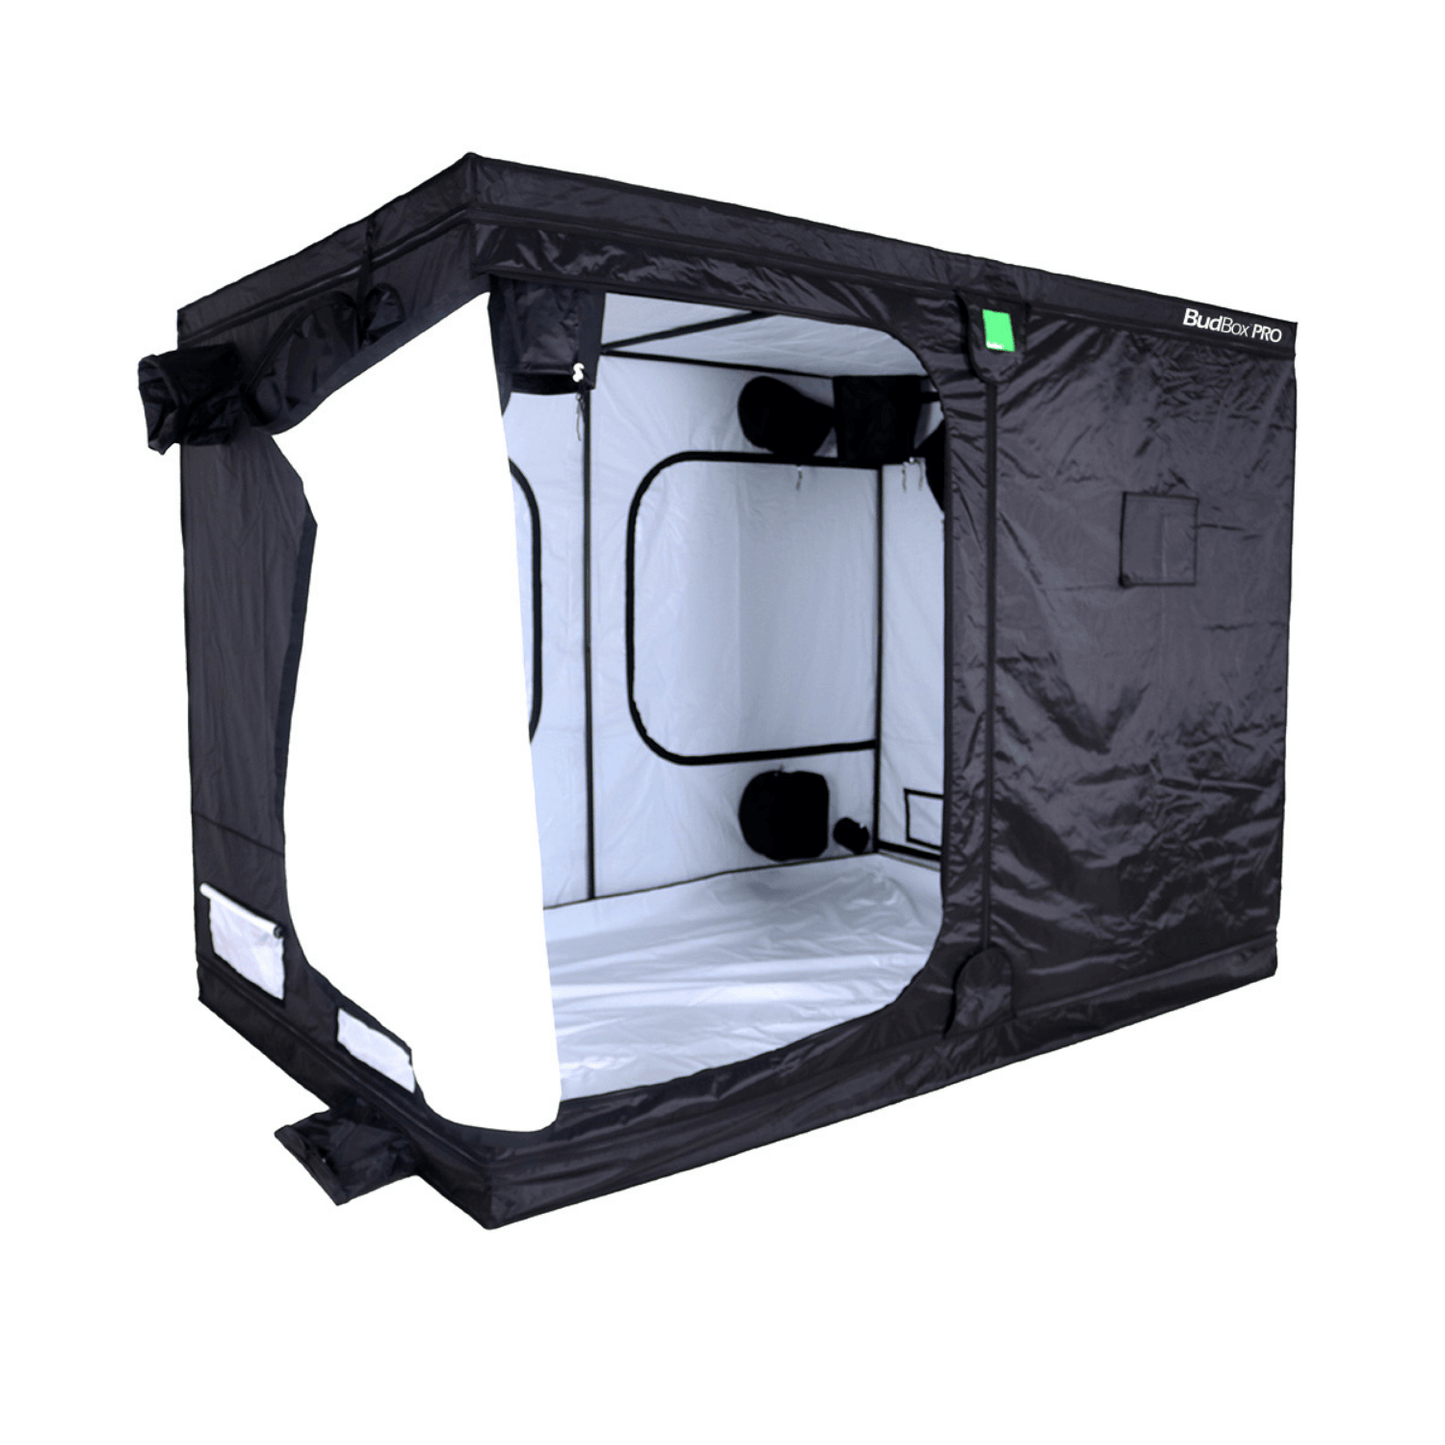 BudBox Pro Titan 3-HL White 300x300x220cm (10'x10'x7'4") 12684 Grow Tents